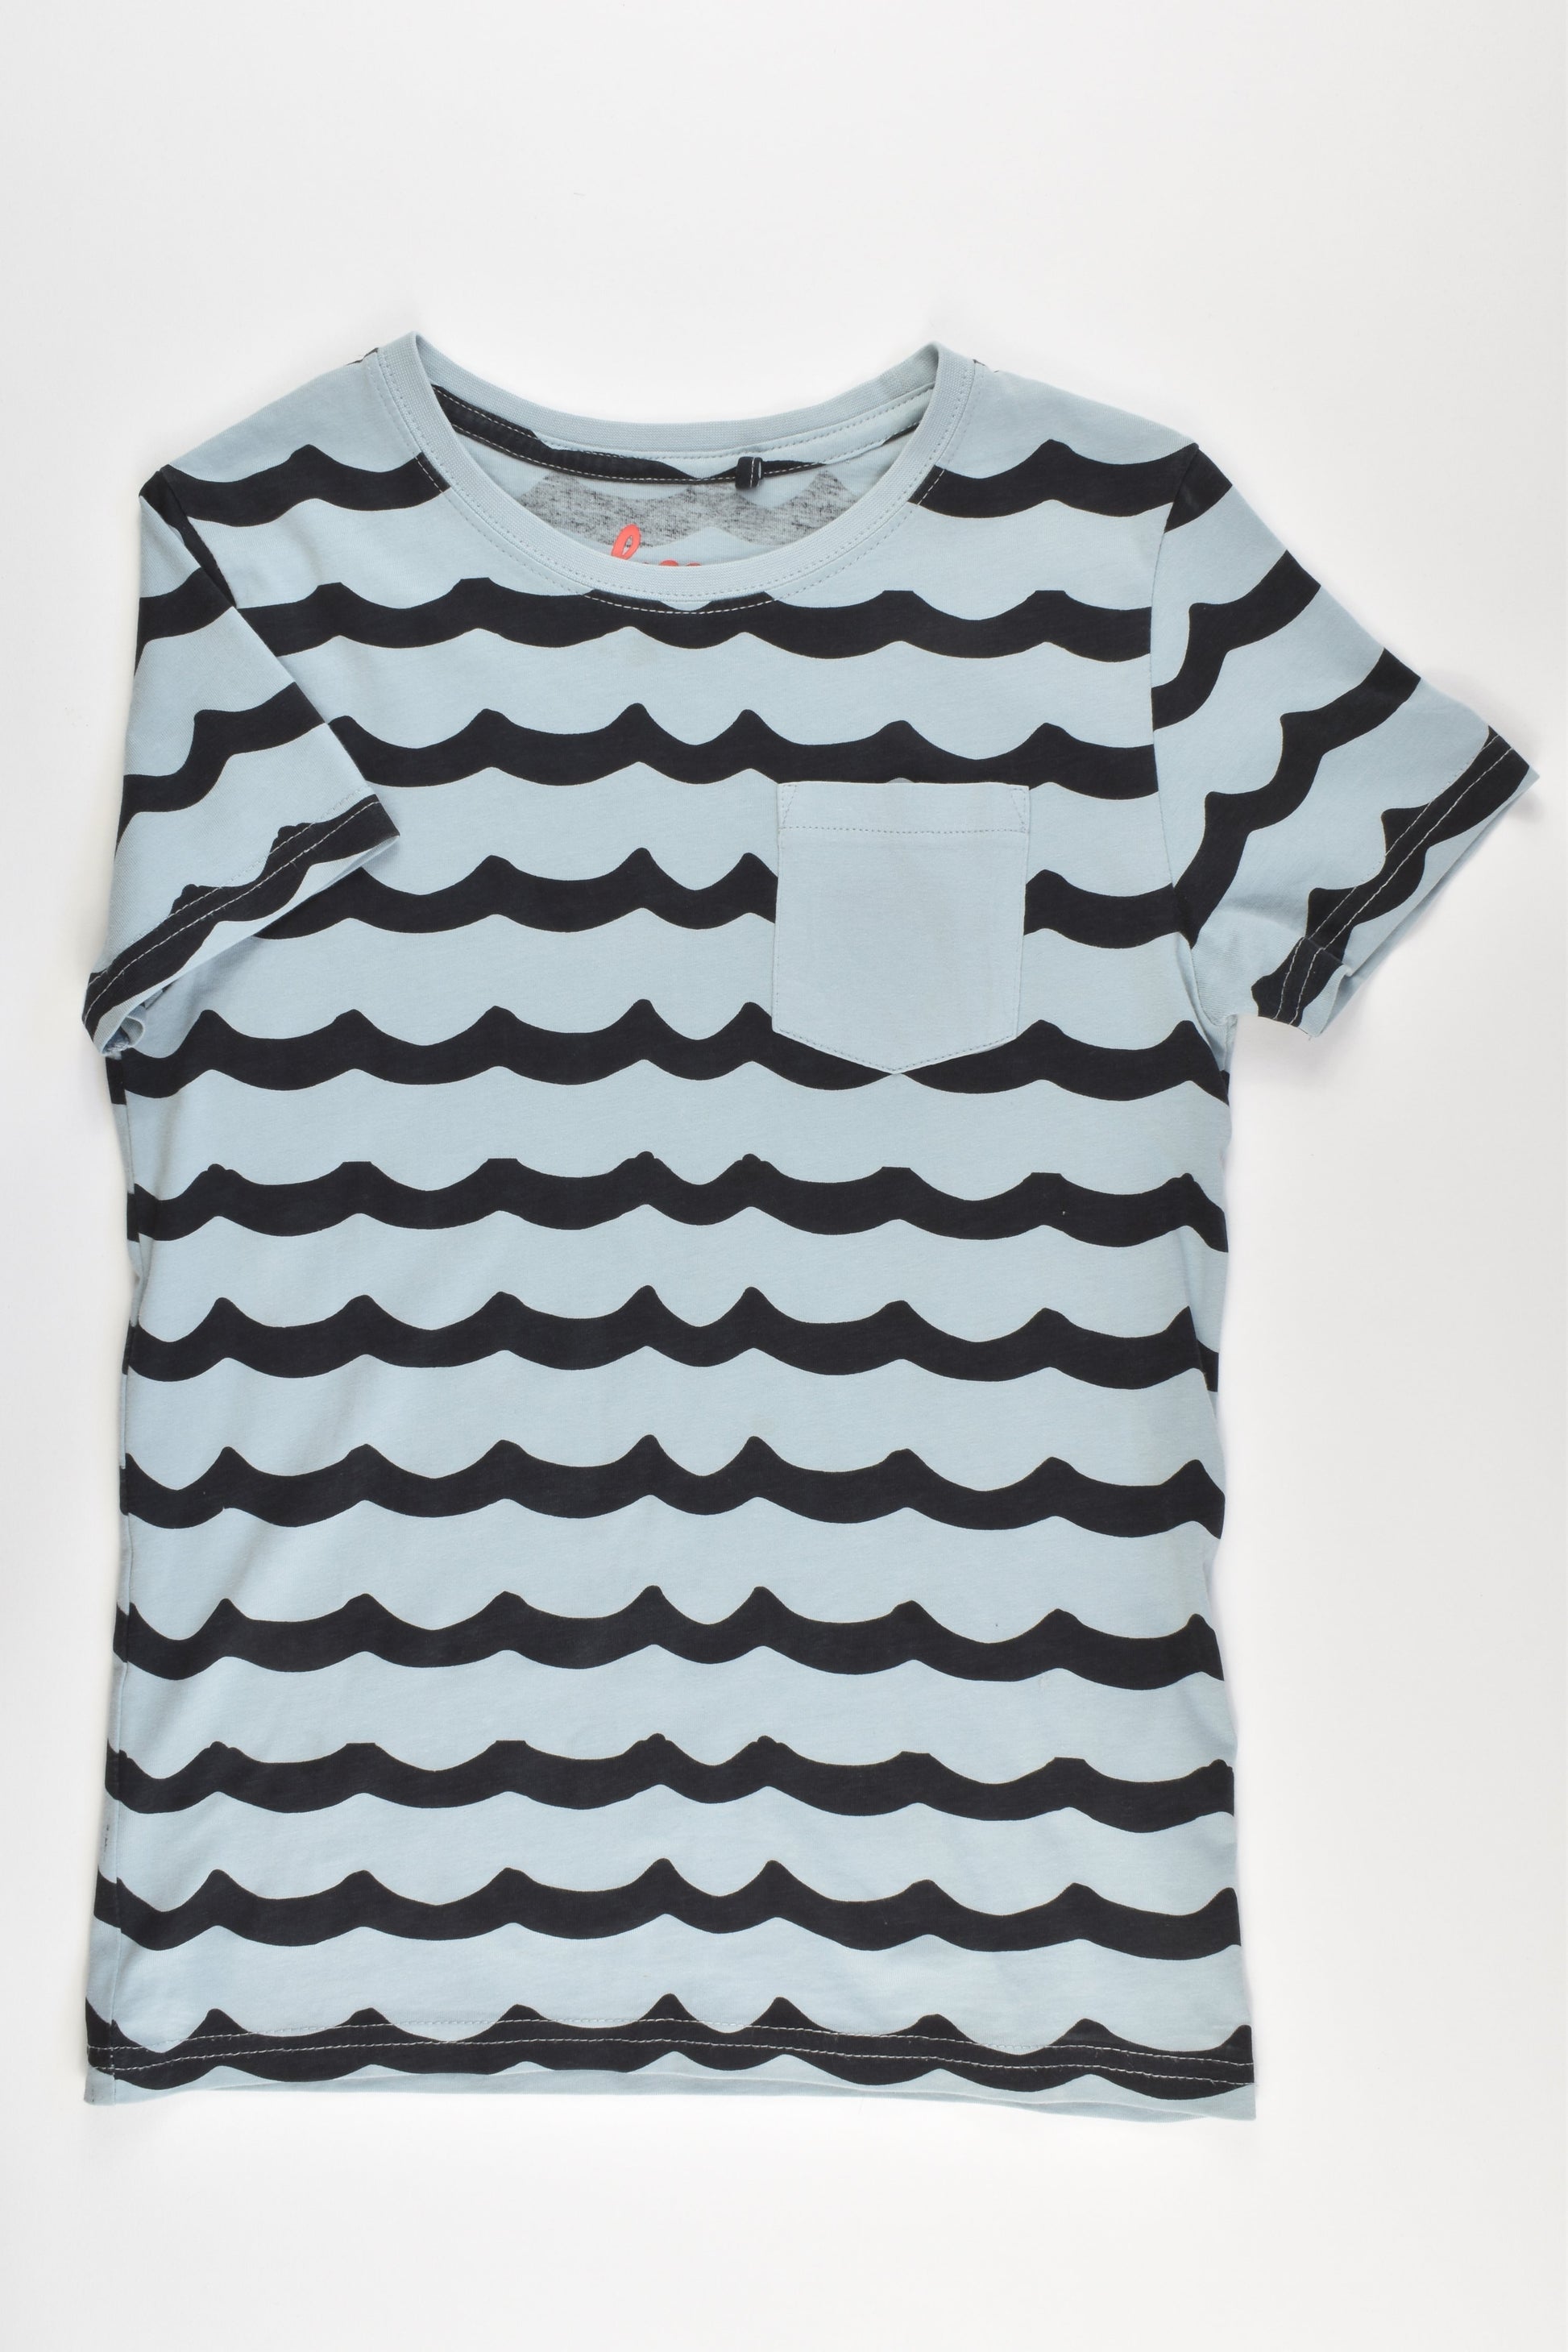 NEW Cotton On Kids Size 9 T-shirt